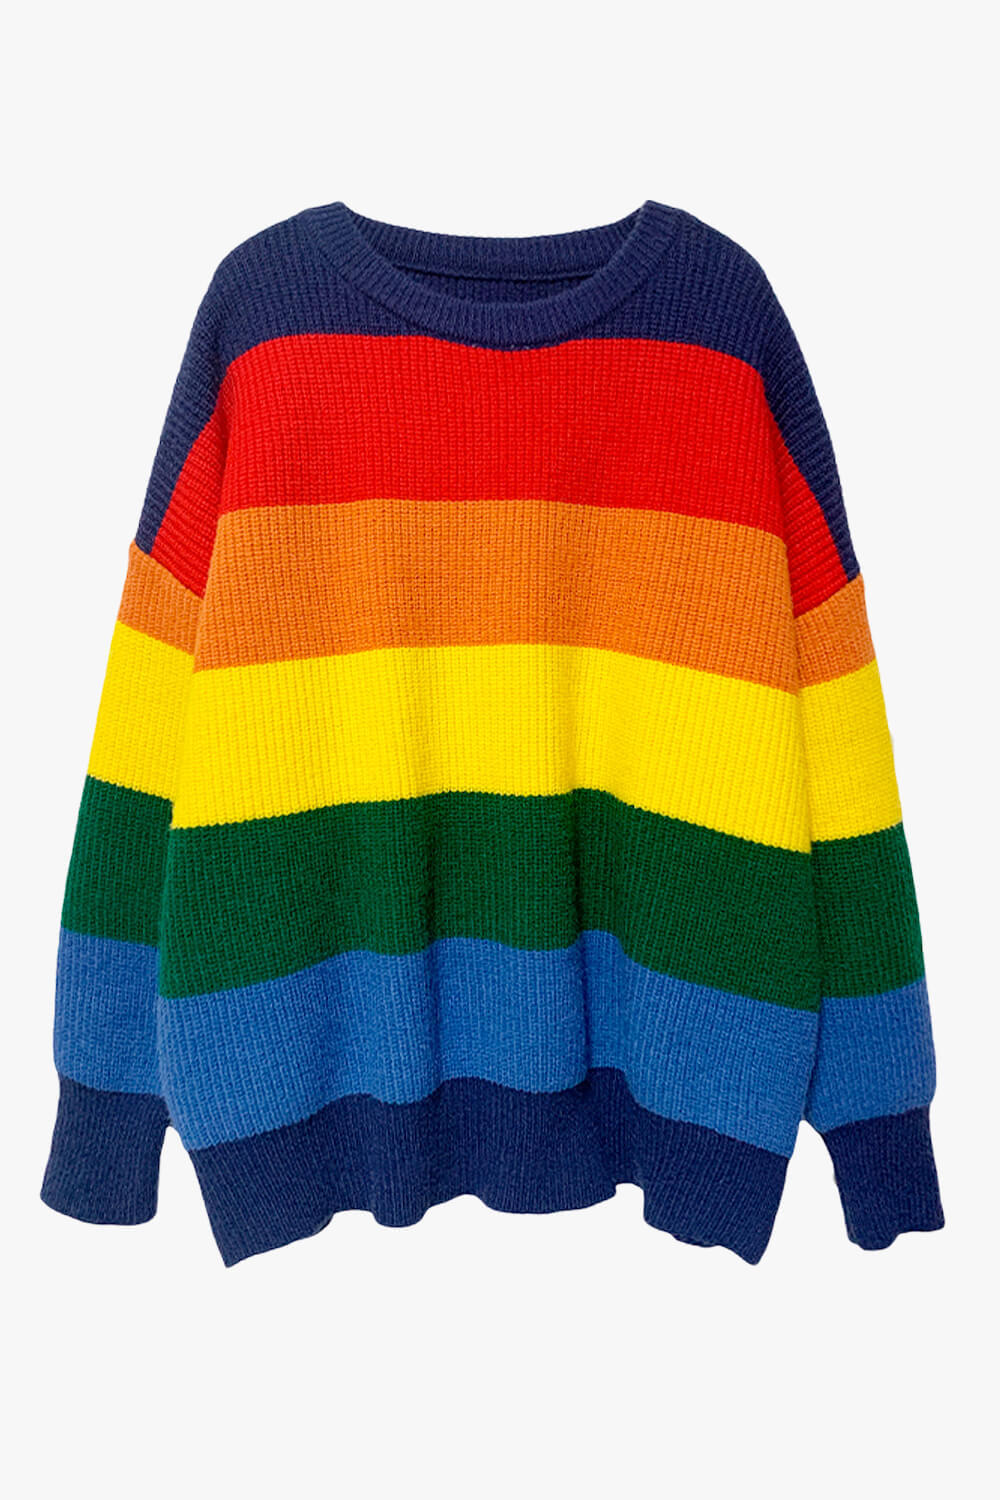 Rainbow Aesthetic Oversized Sweater - Aesthetic Shop